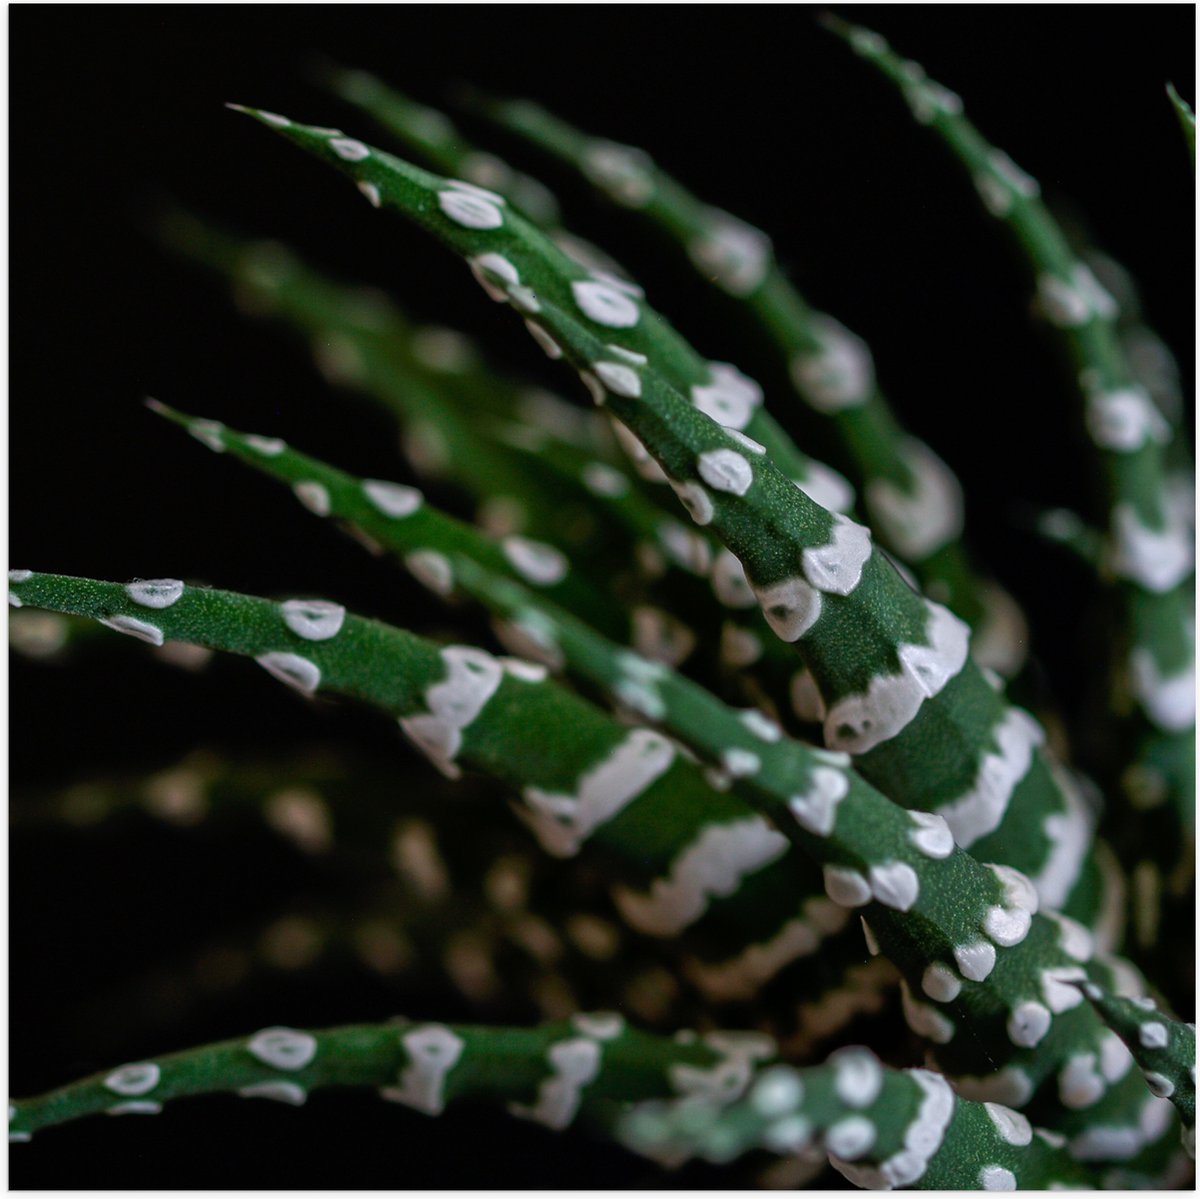 WallClassics - Poster Glanzend - Fasciated haworthia Plant tegen Zwarte Achtergrond - 50x50 cm Foto op Posterpapier met Glanzende Afwerking